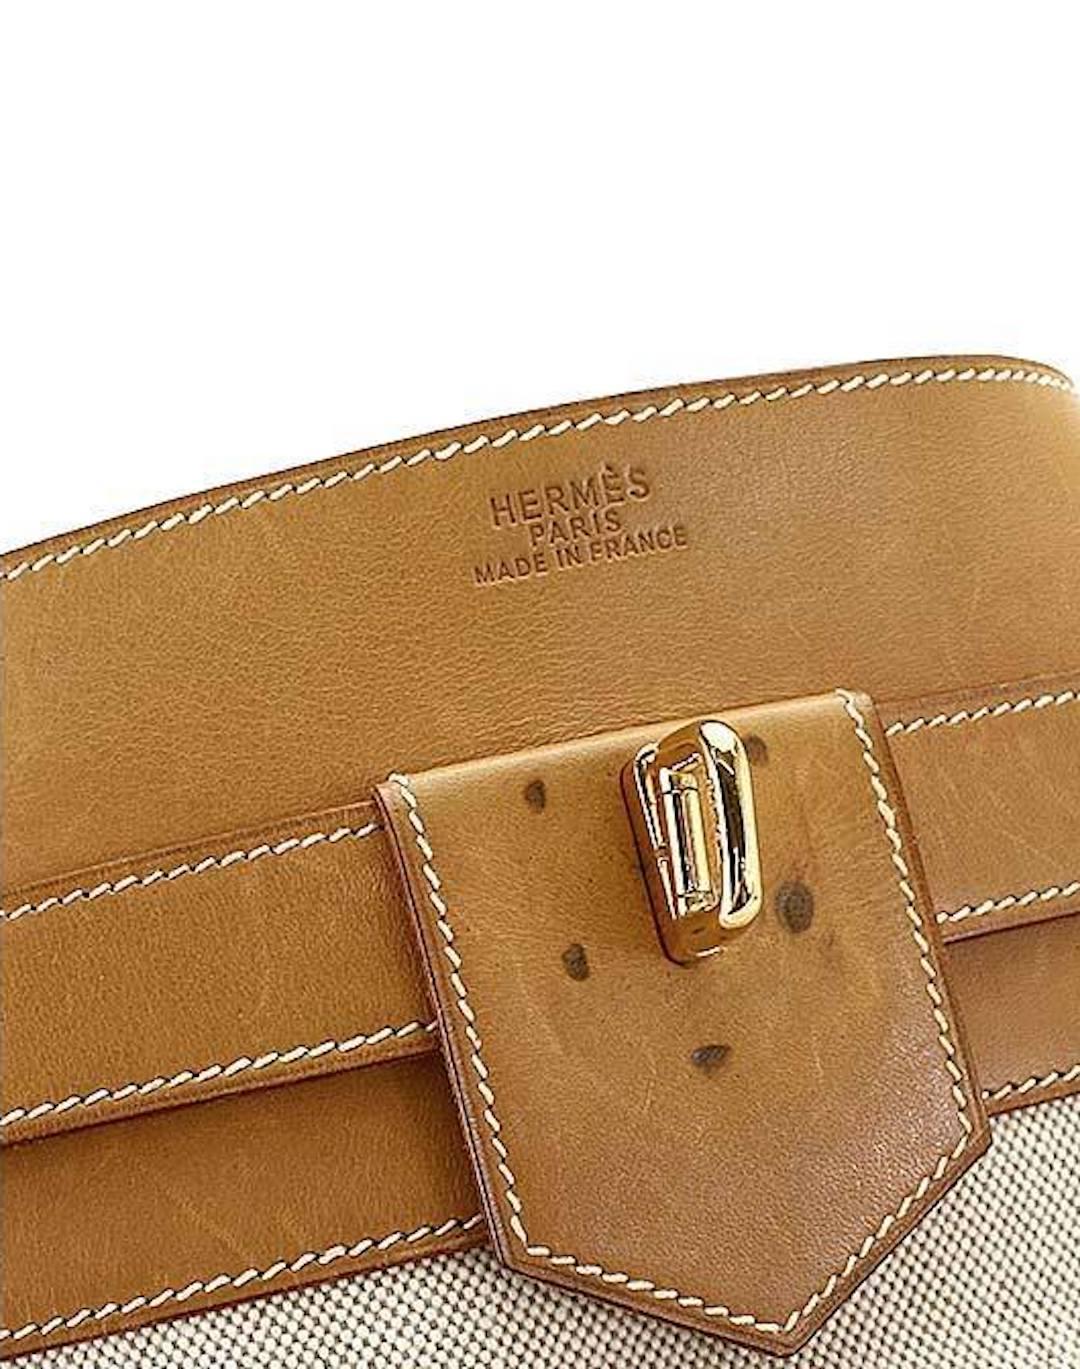 Beige Hermes Tan Canvas Cognac Leather Top Handle Satchel Carryall Shoulder Bag